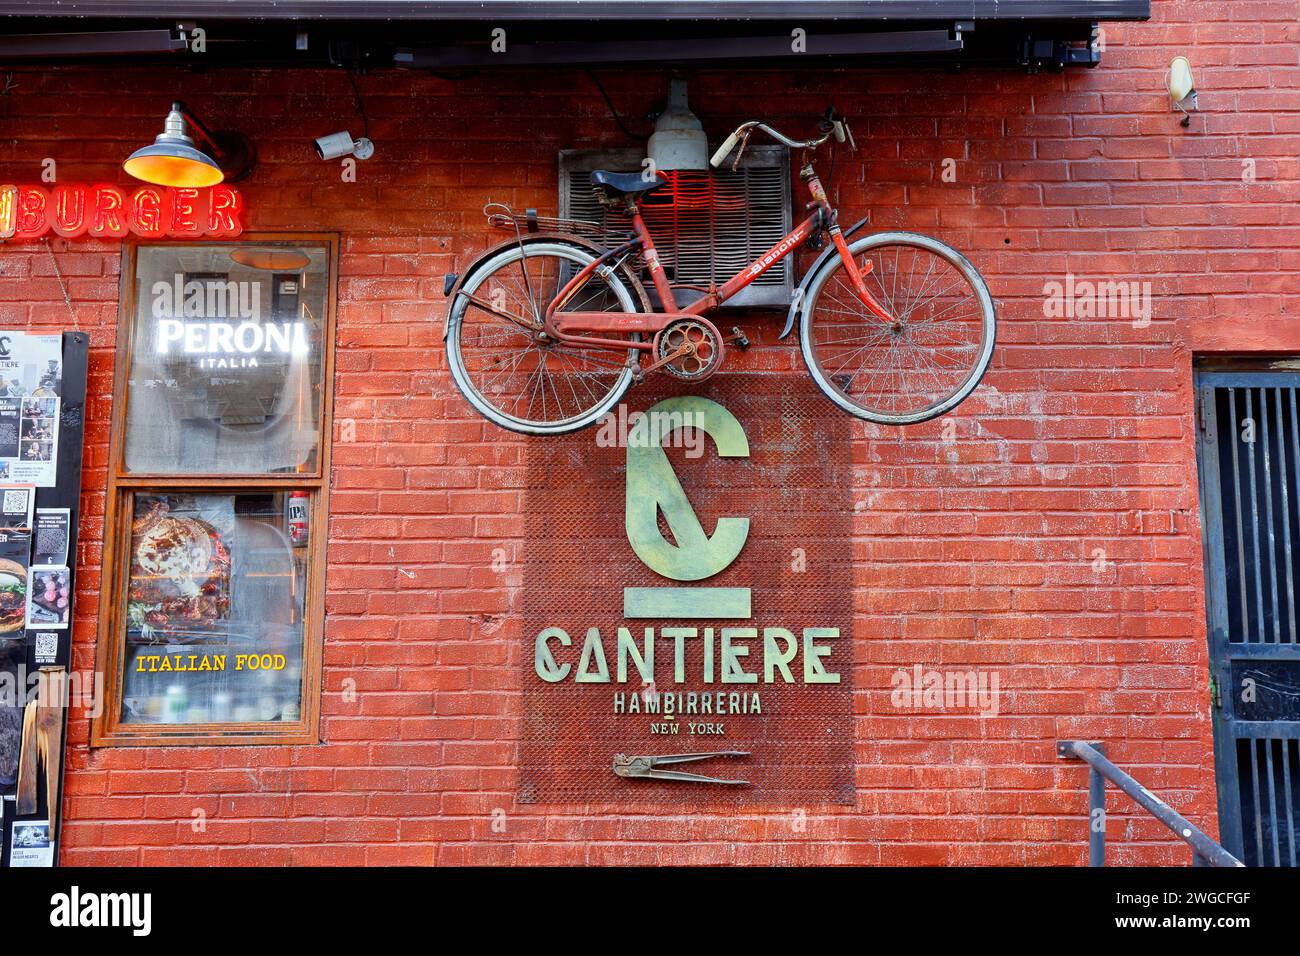 Cantiere Hambirreria, 41 Kenmare St, New York, NYC storefront photo of an Italian hamburger restaurant in Manhattan's Nolita neighborhood. Stock Photo